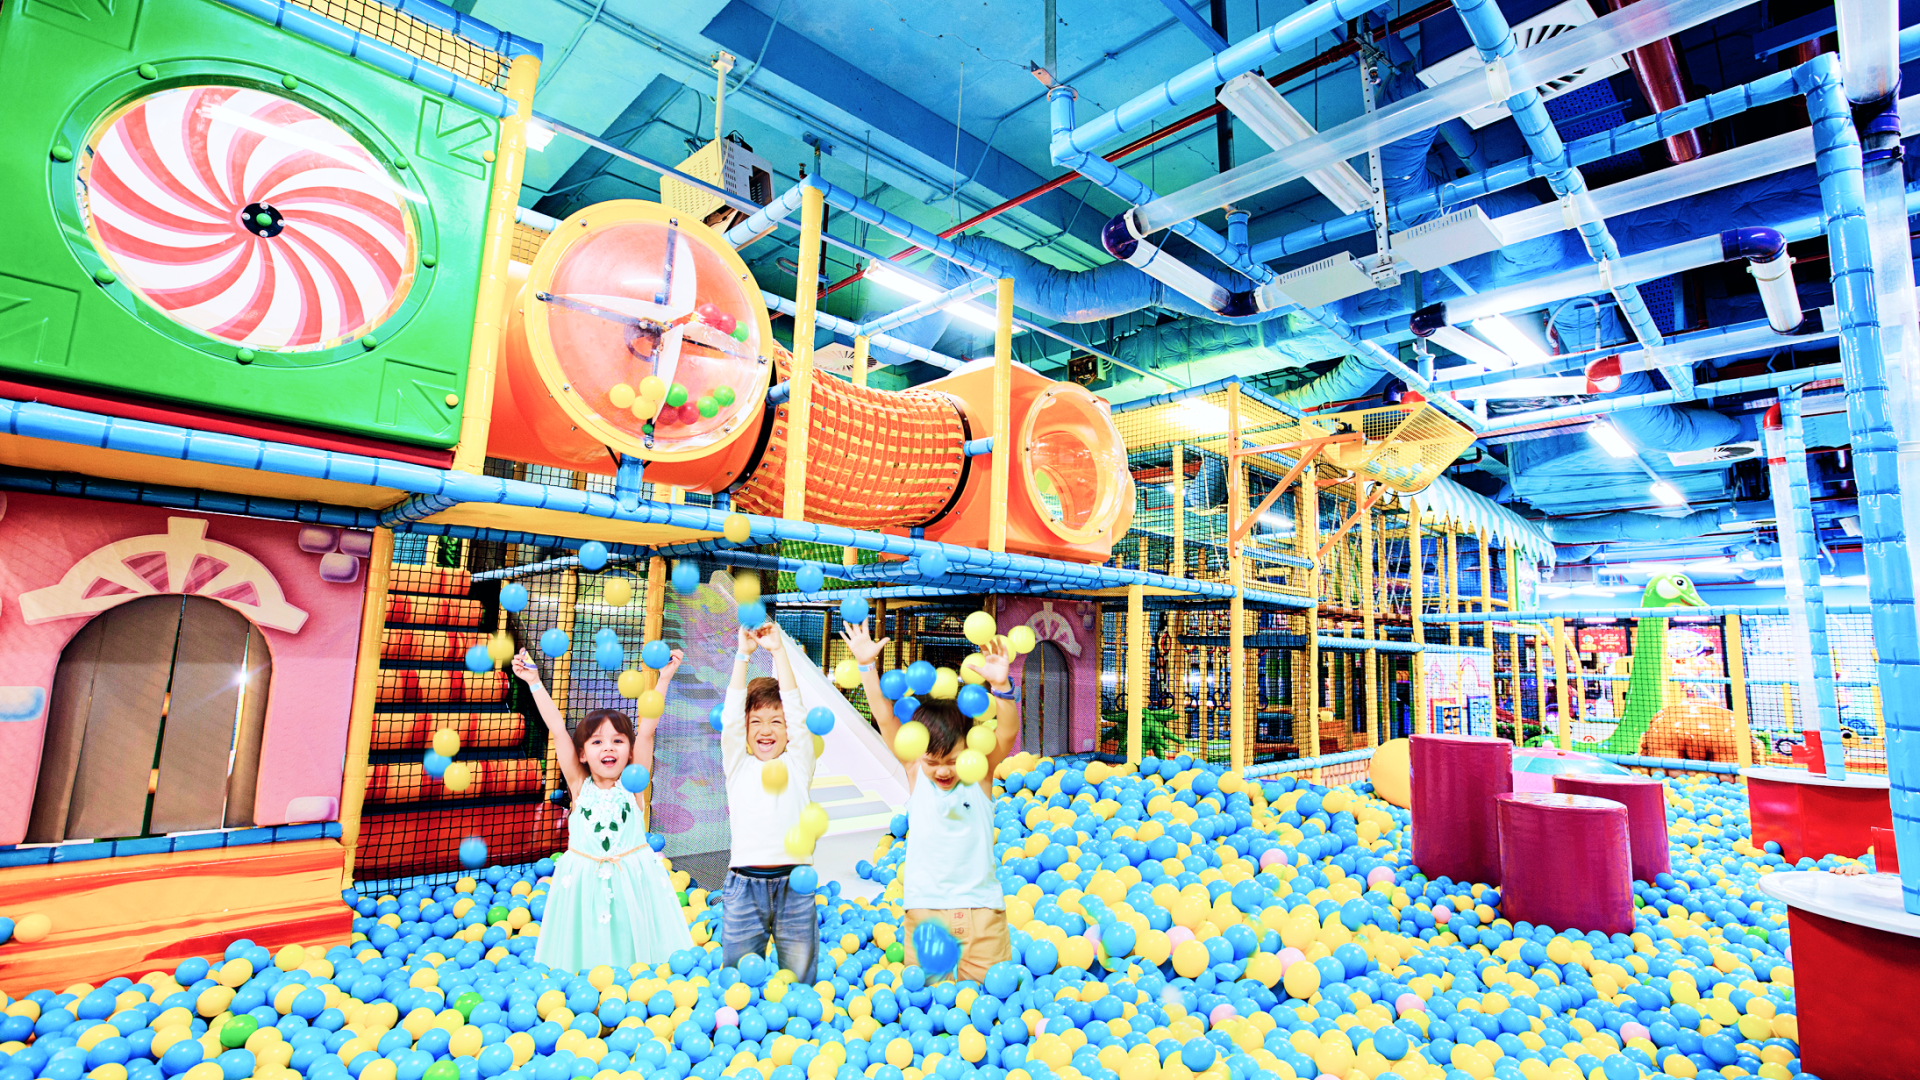 Children's play area in Saigon - Tiniworld Amusement Park District 3